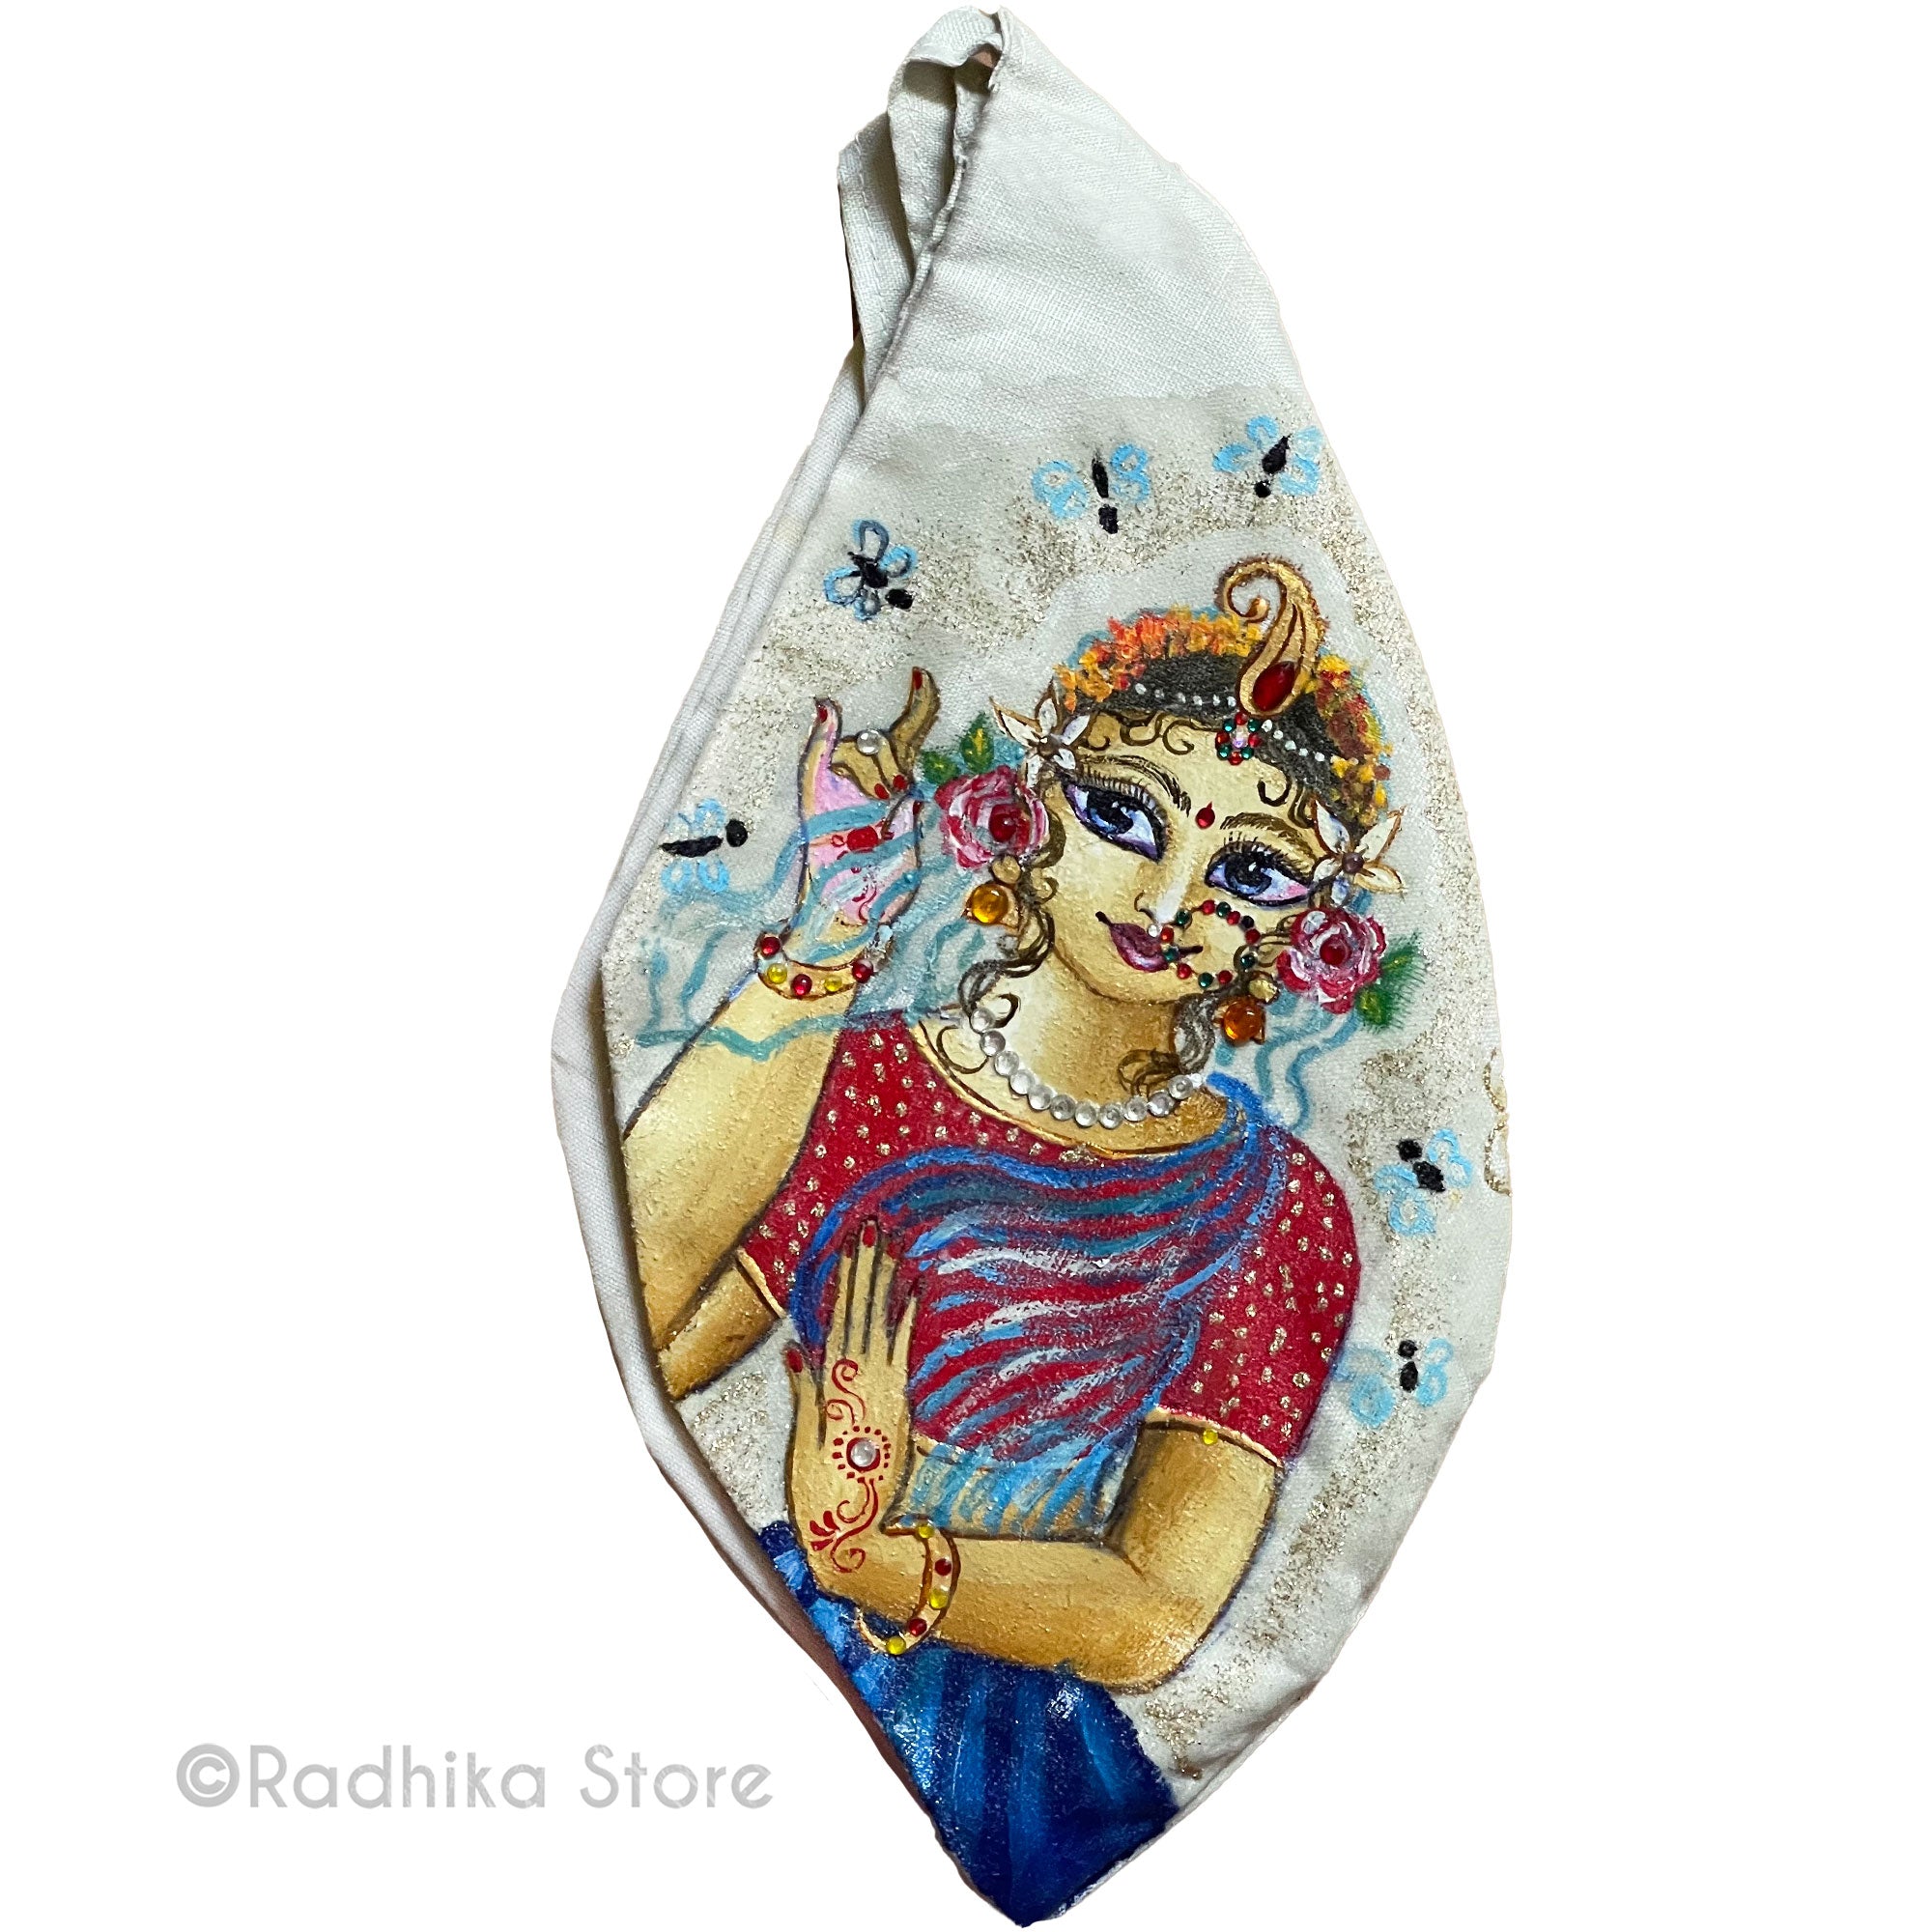 Sweet Sri Radhika - Hand Painted and Jeweled - Bead Bag